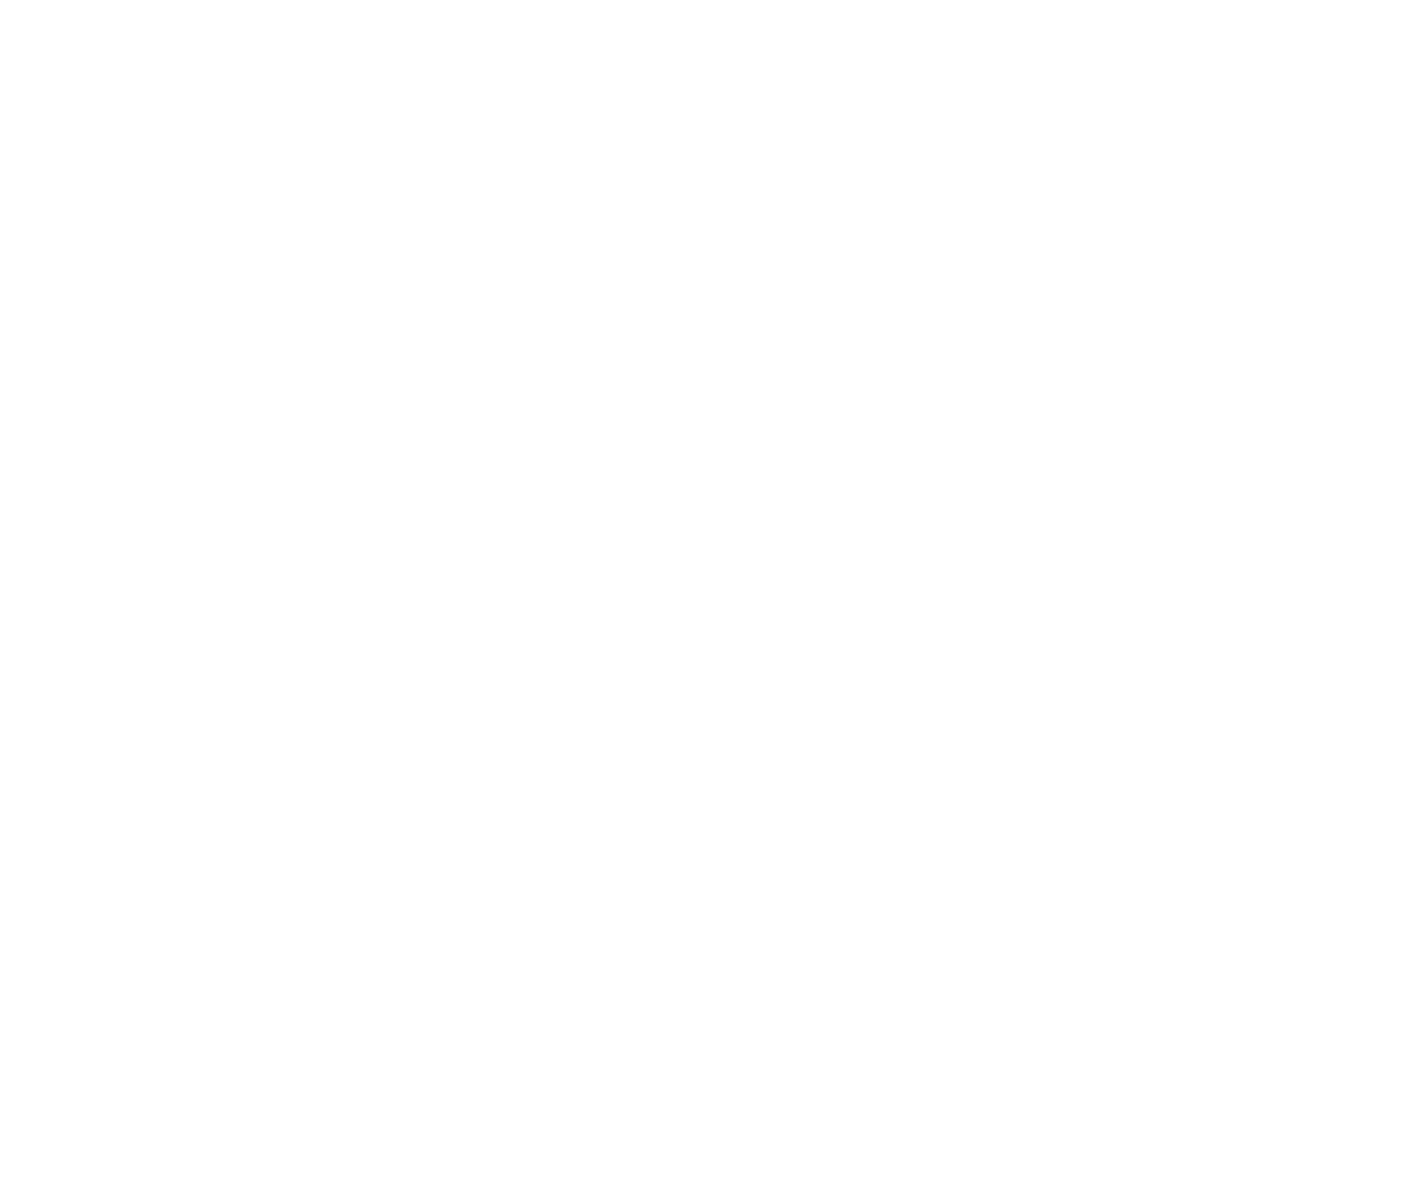 Ekstedt at The Yard